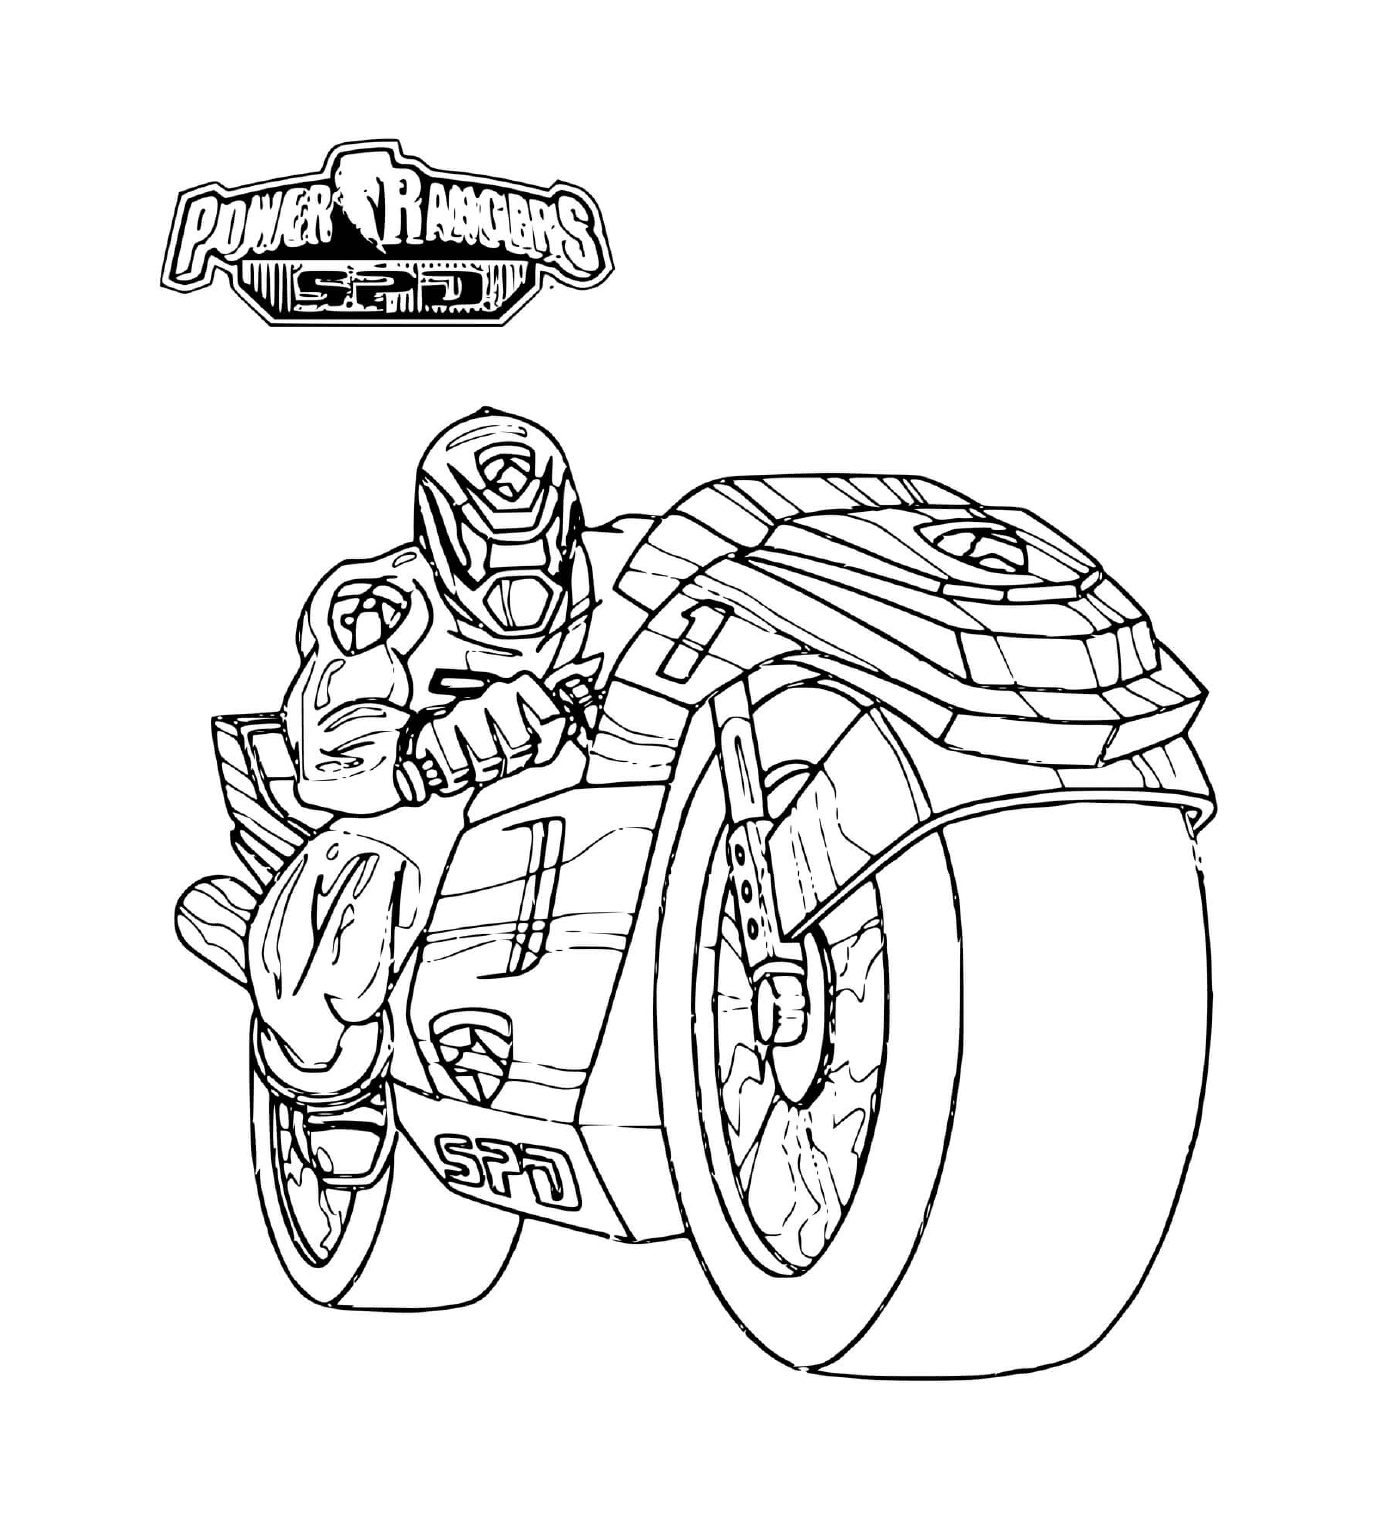  Power Ranger riding a motorcycle 